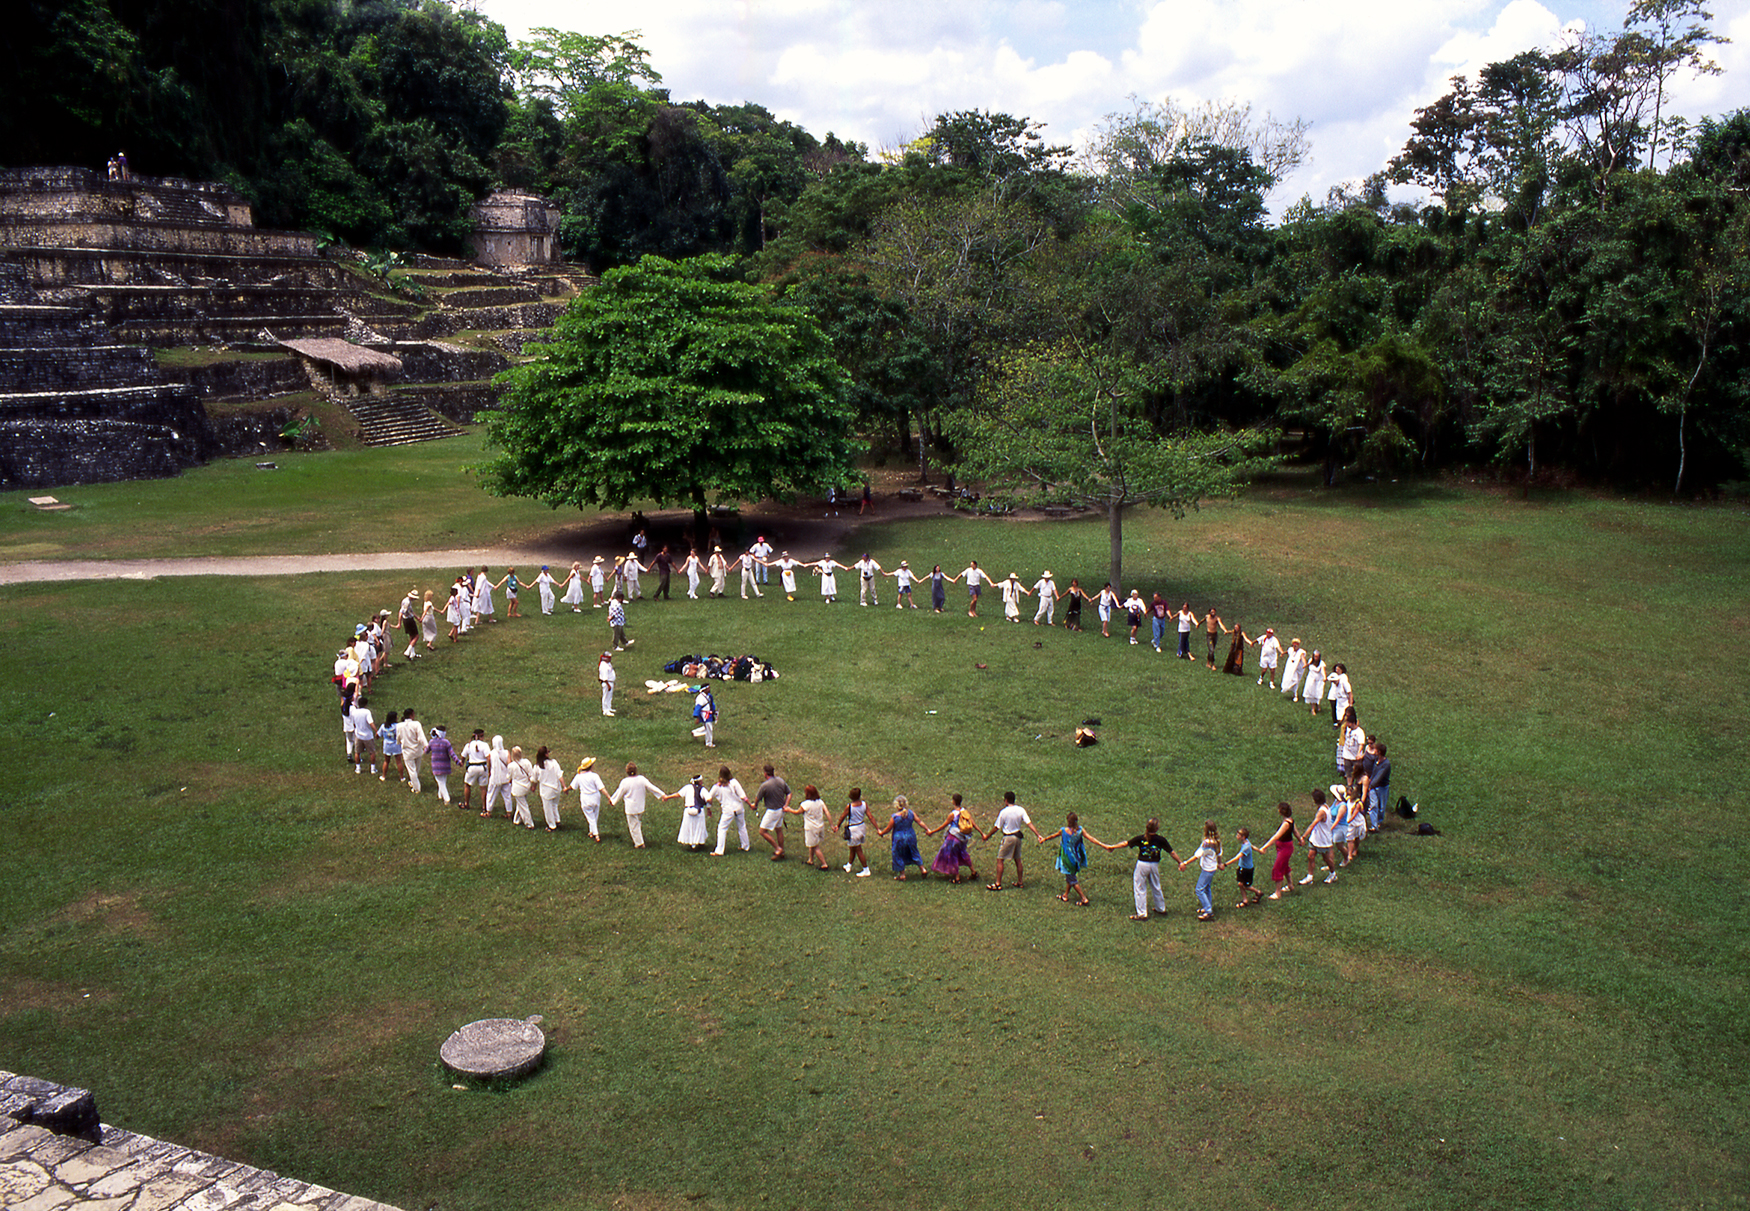 Equinox celebration in Palenque...